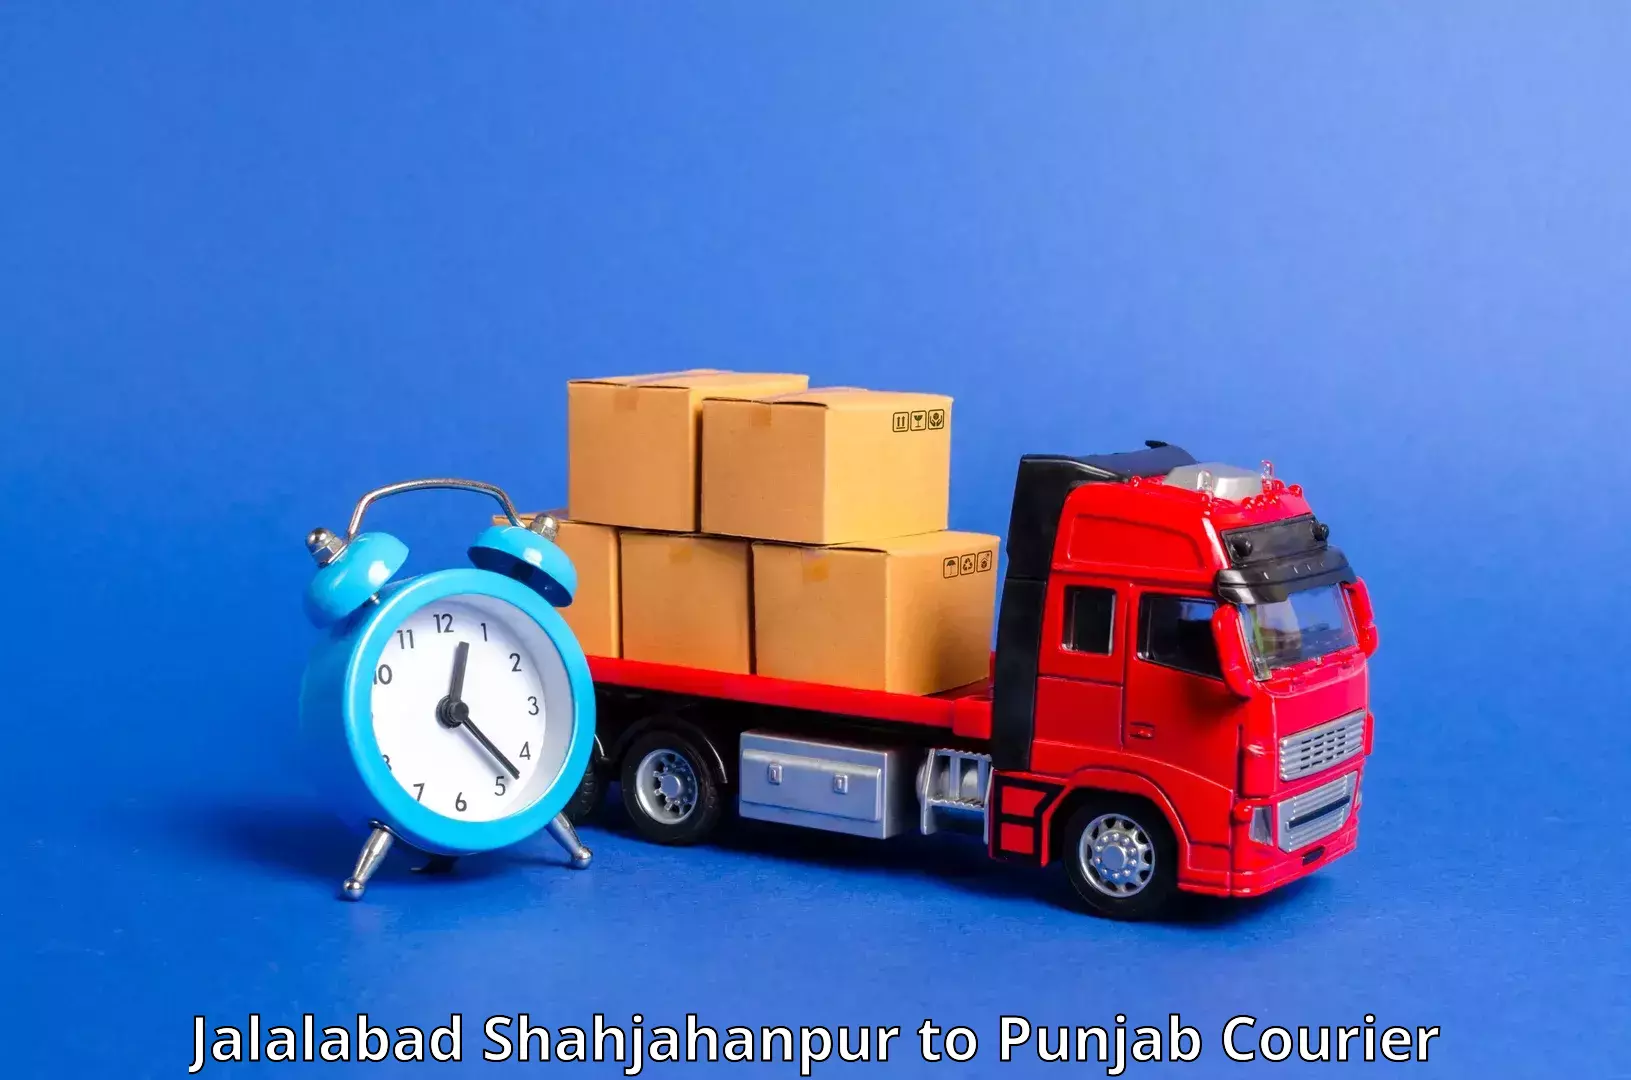 Express postal services Jalalabad Shahjahanpur to Nangal